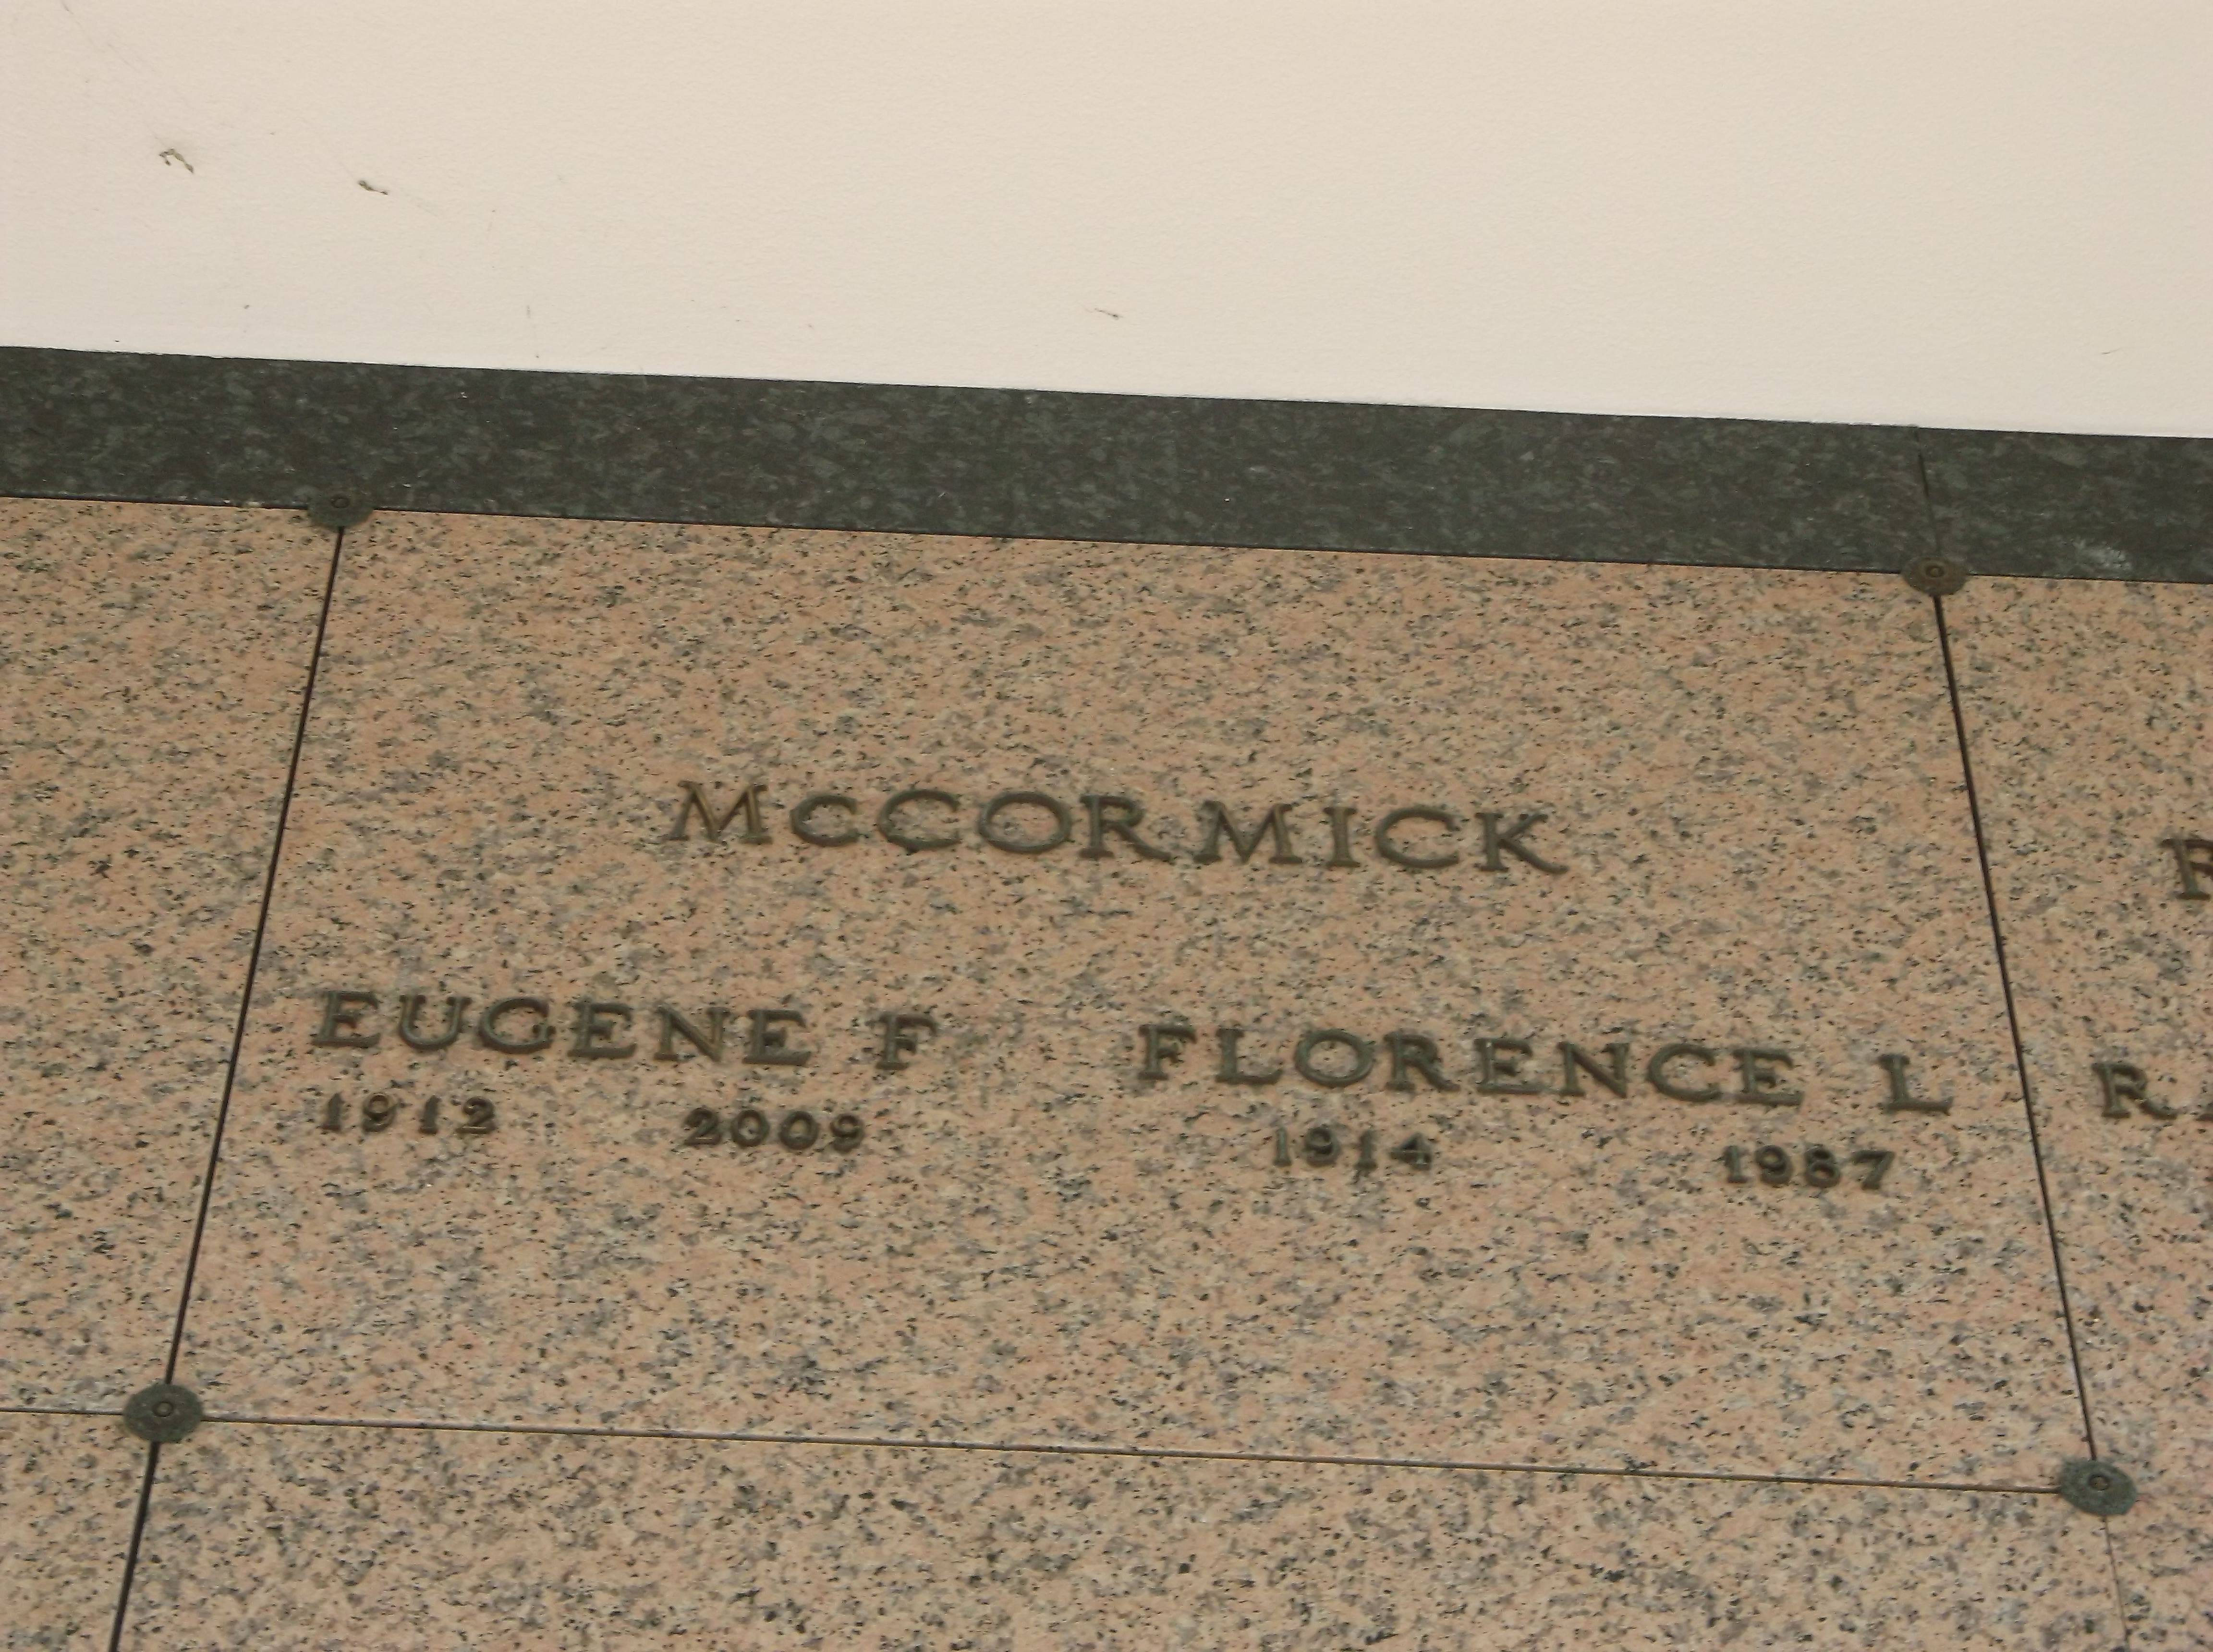 Florence L McCormick